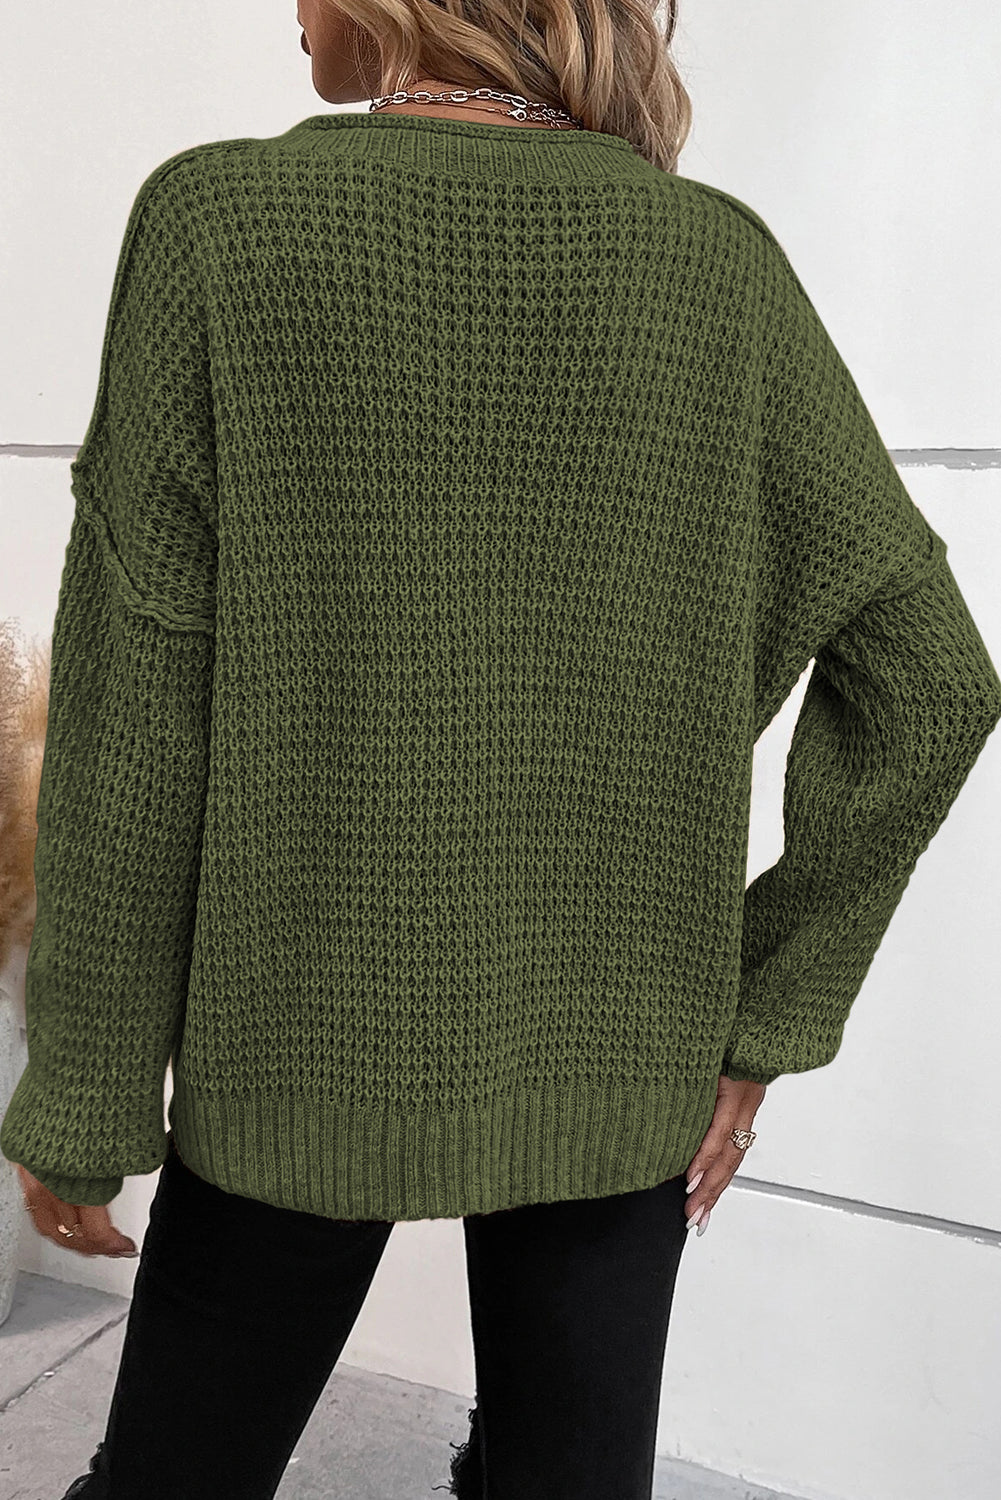 Black Pointelle Knit Button V Neck Drop Shoulder Sweater